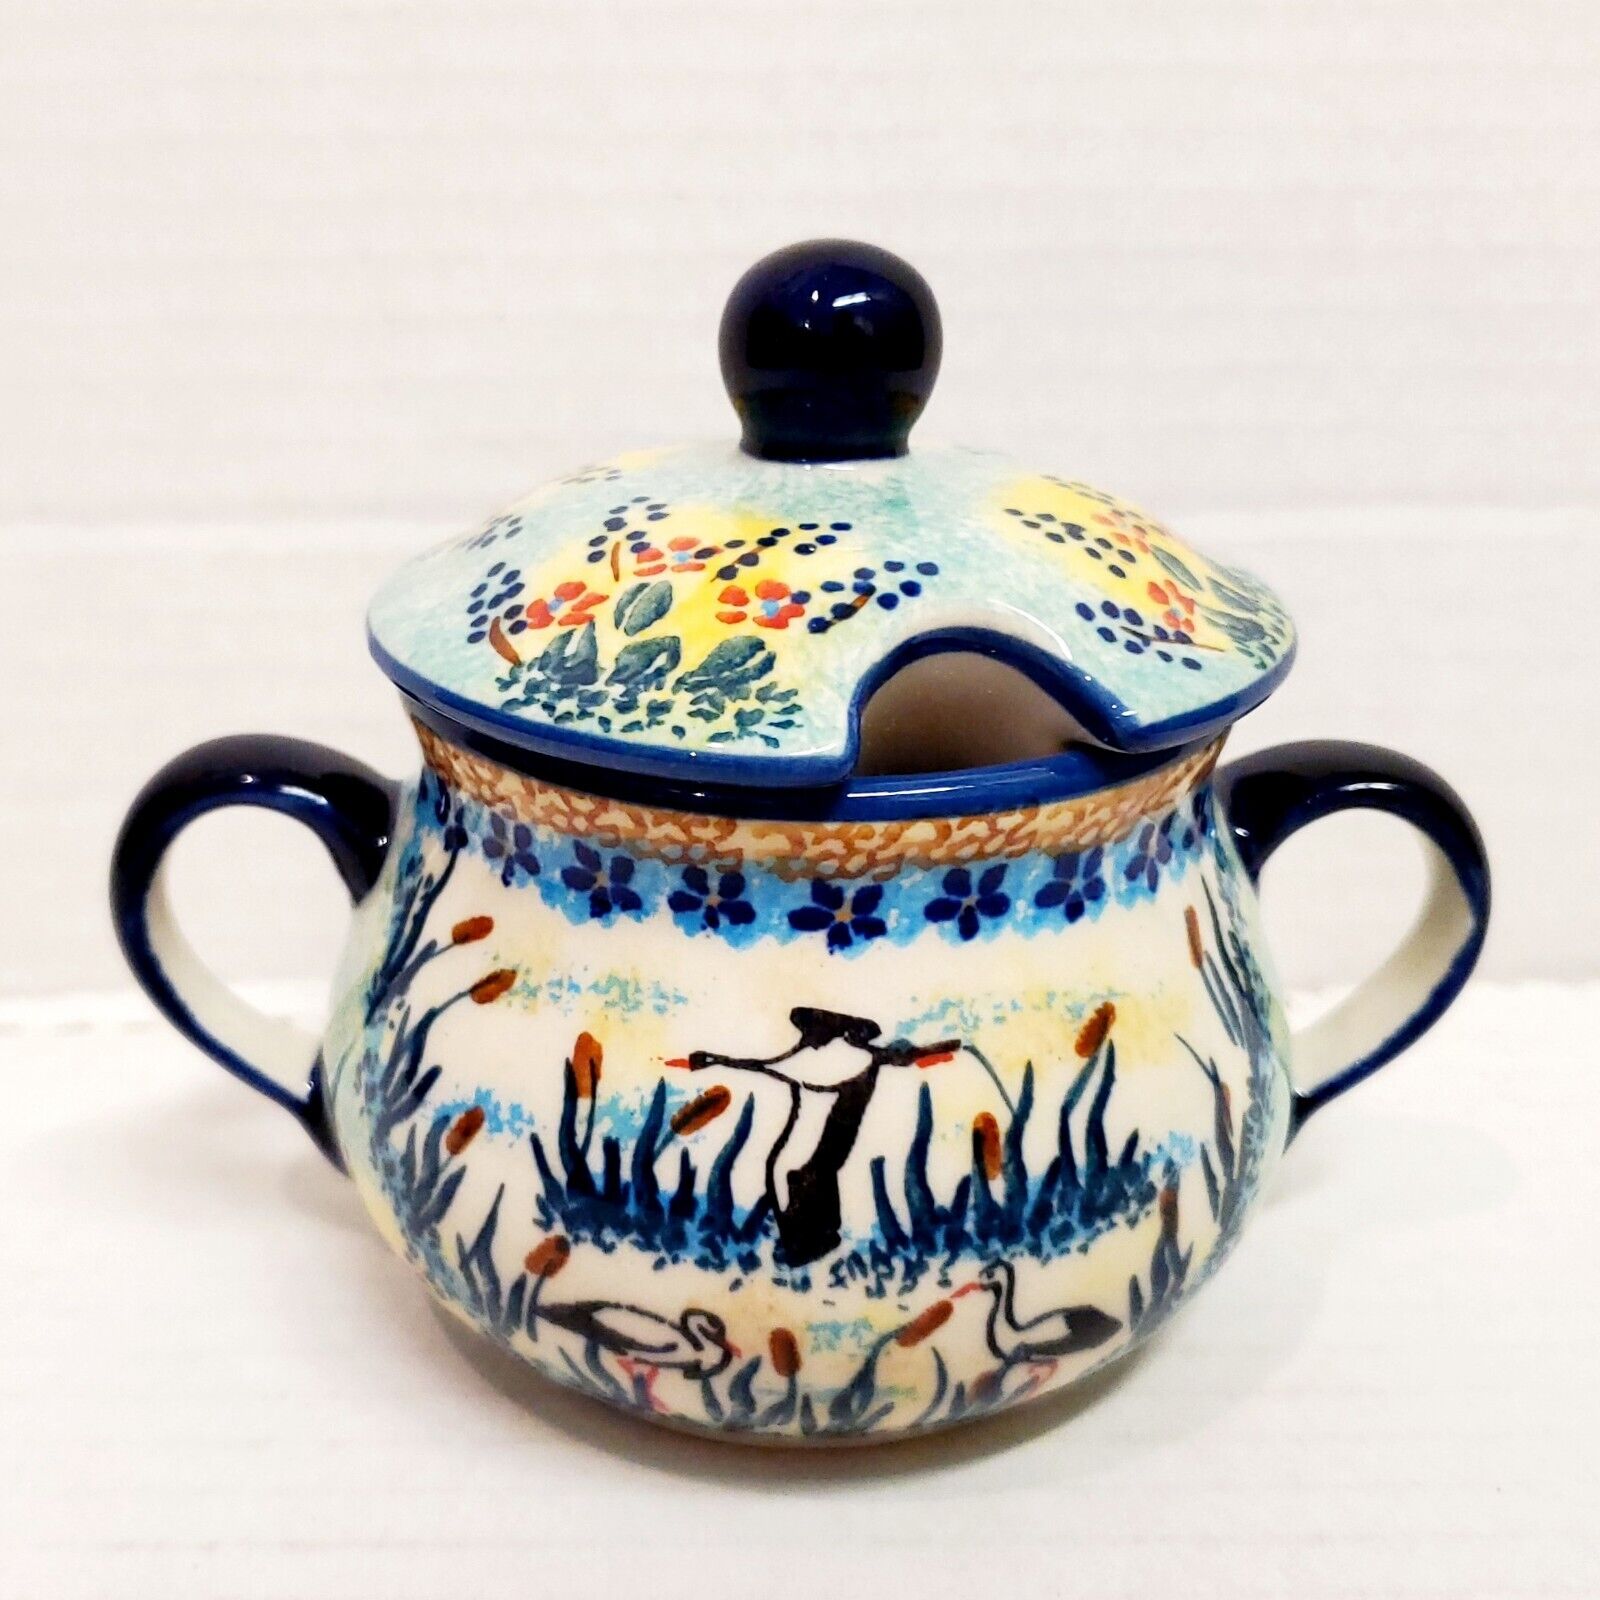 Polish Pottery Stork Sugar Bowl, Signed by the Artist, Kleszczynski